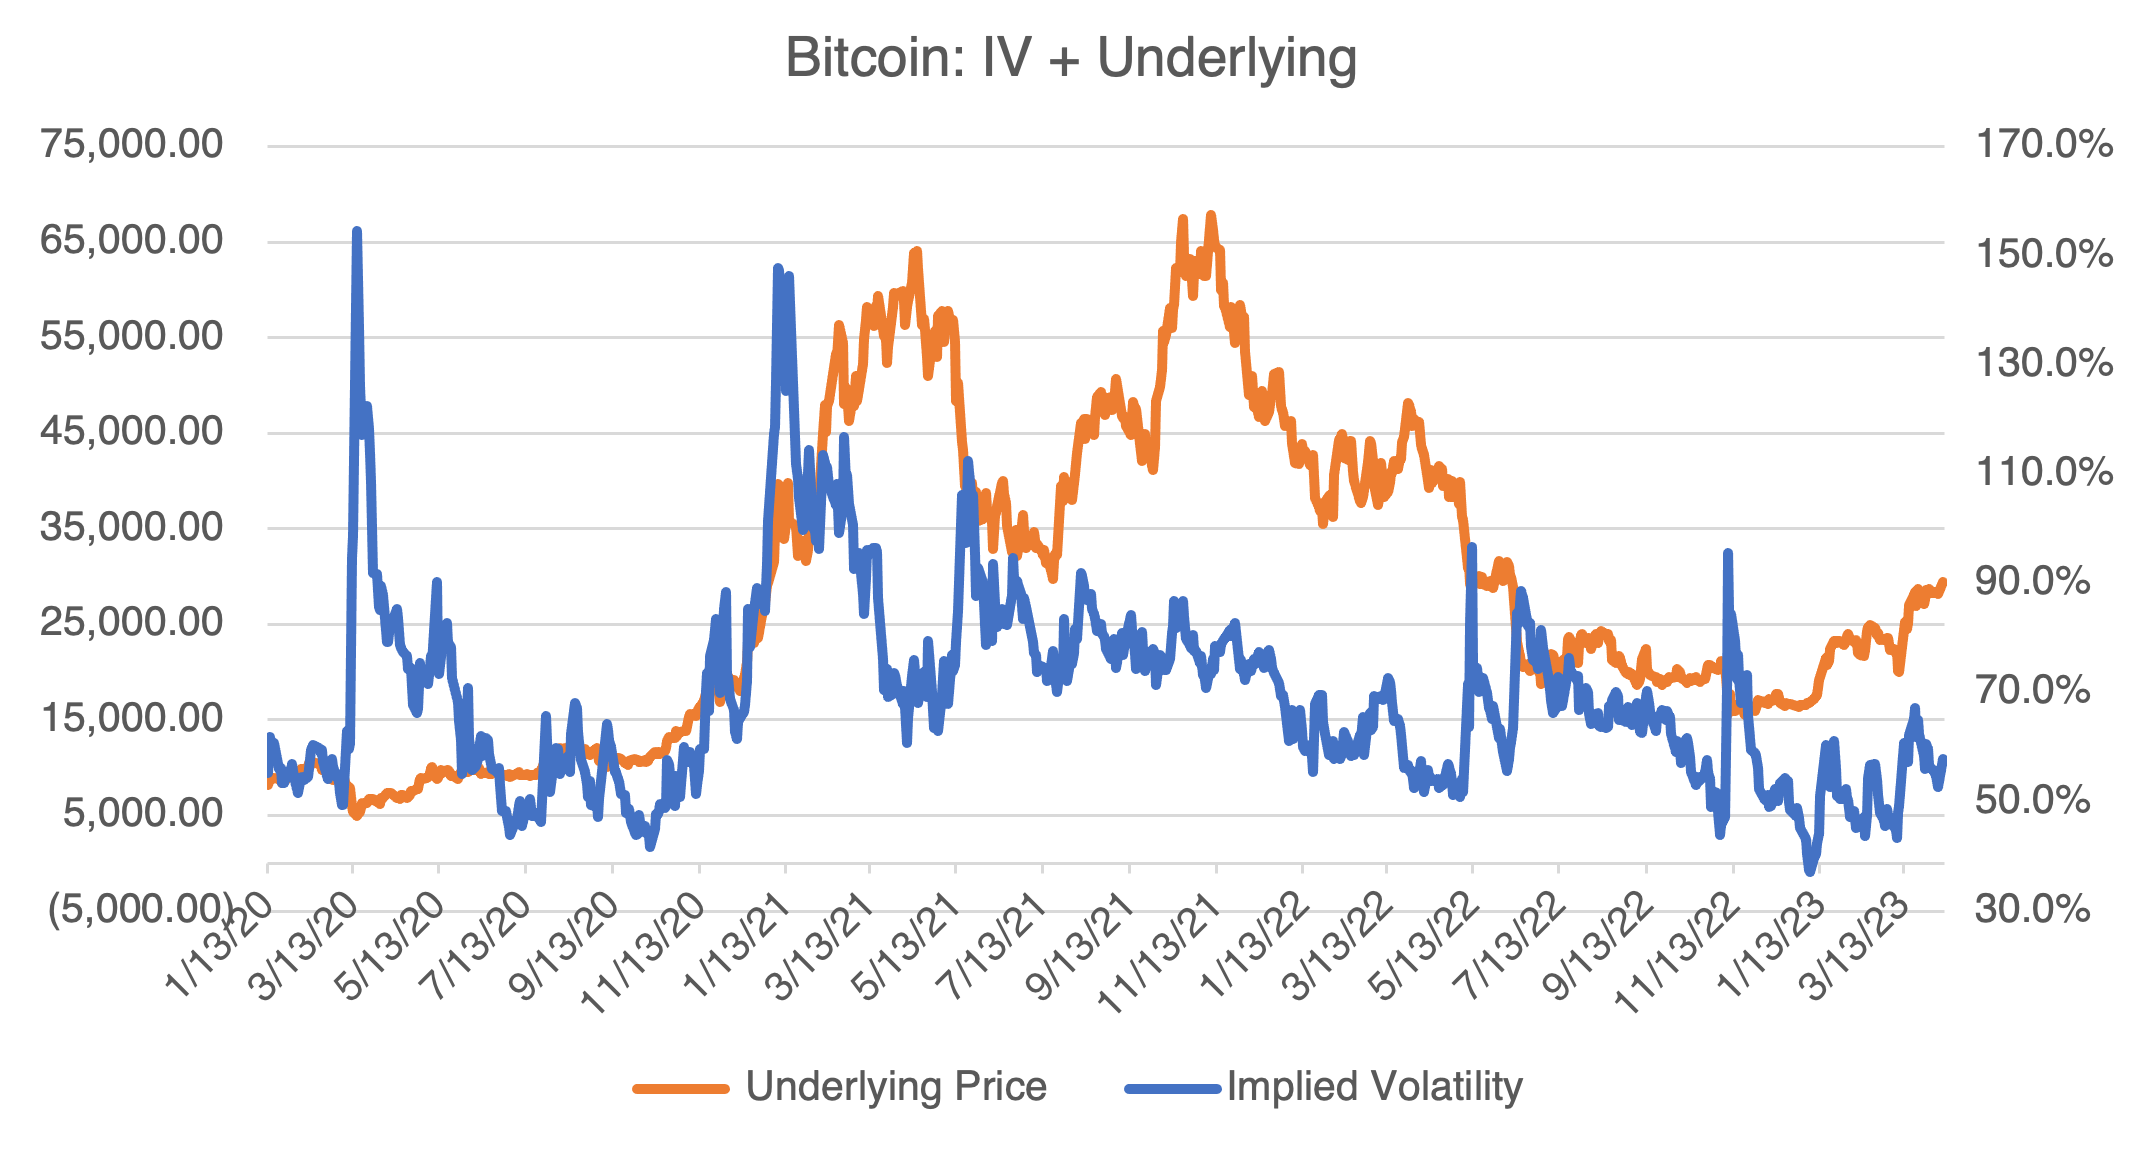 Bitcoin IV + Underlying